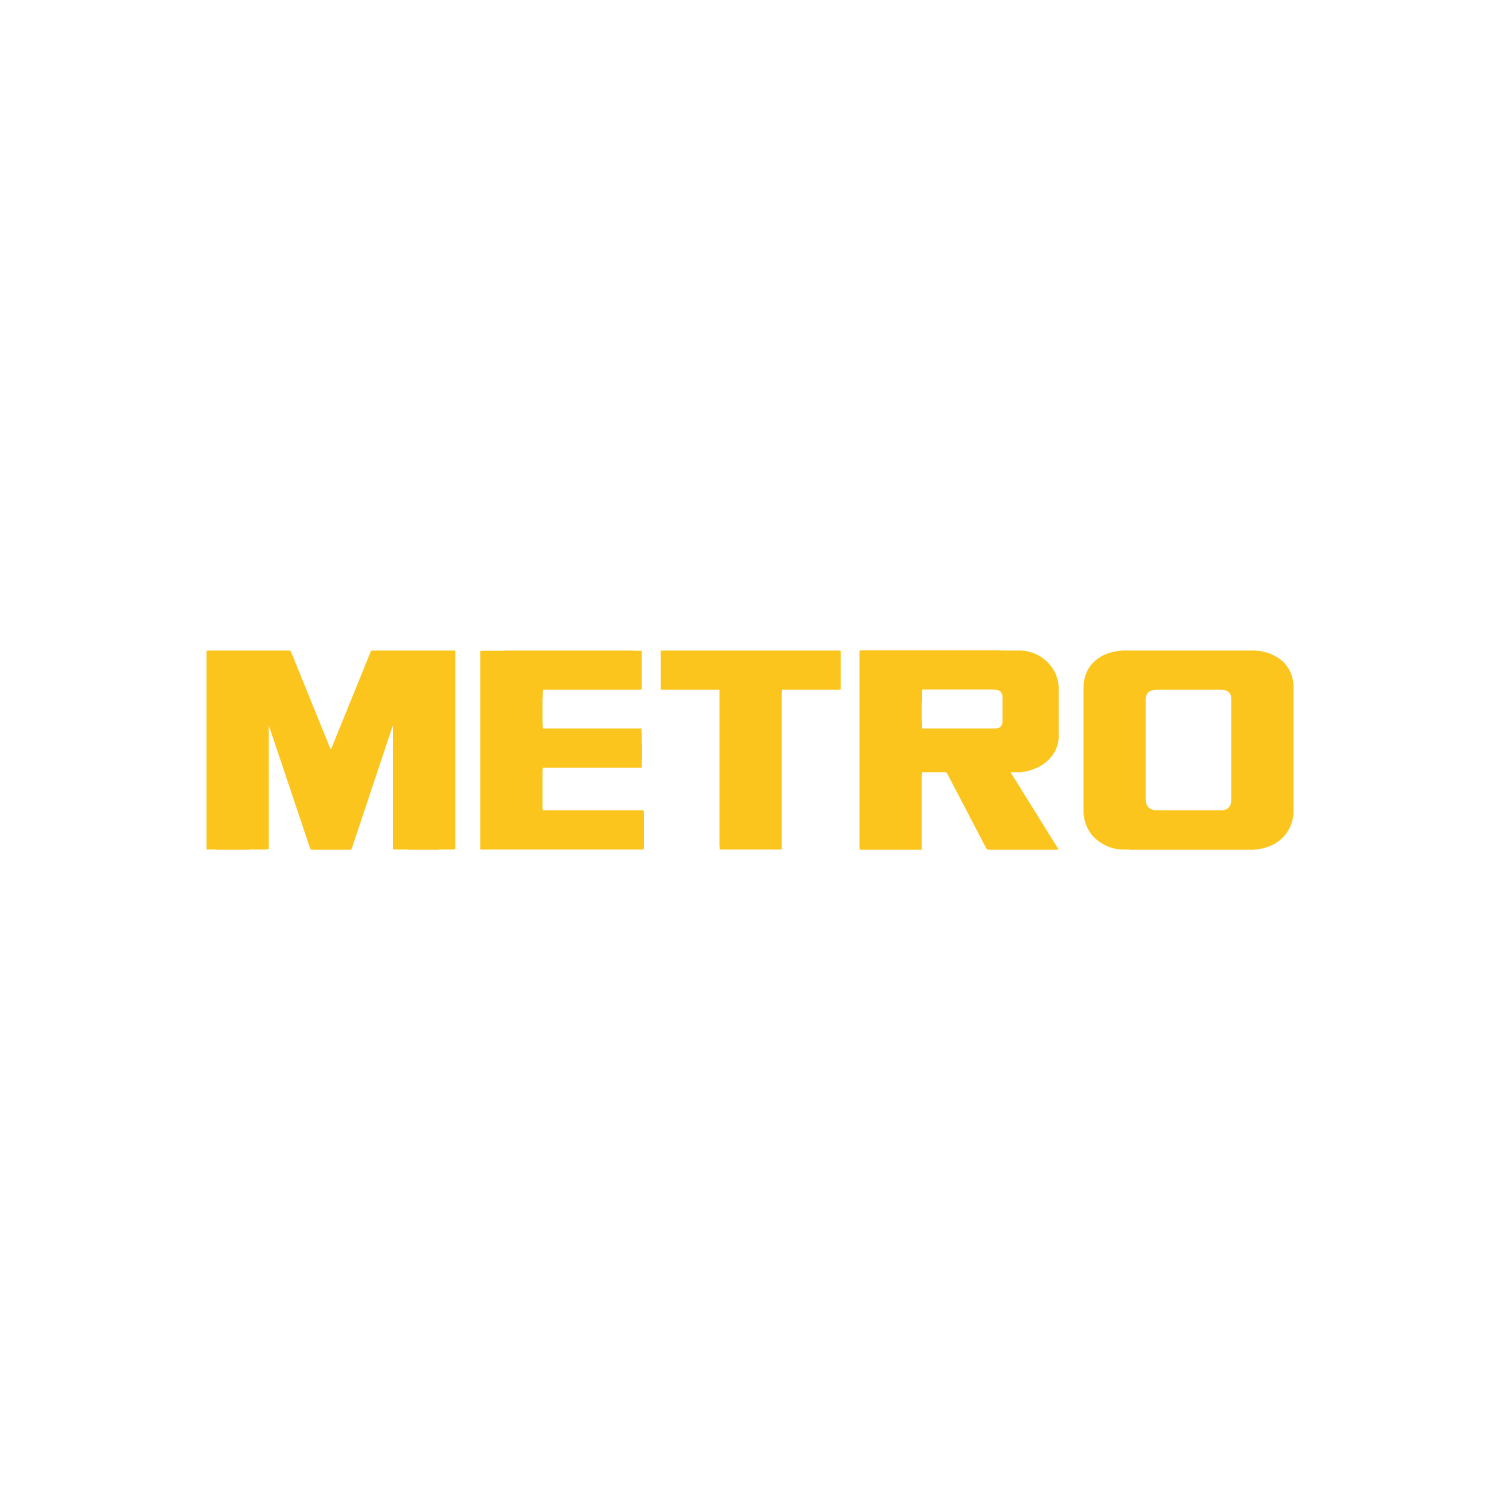 G c k ru. Метро кэш энд Керри лого. Торговая сеть Metro логотип. Метро магазин значок. Логотип m metr.